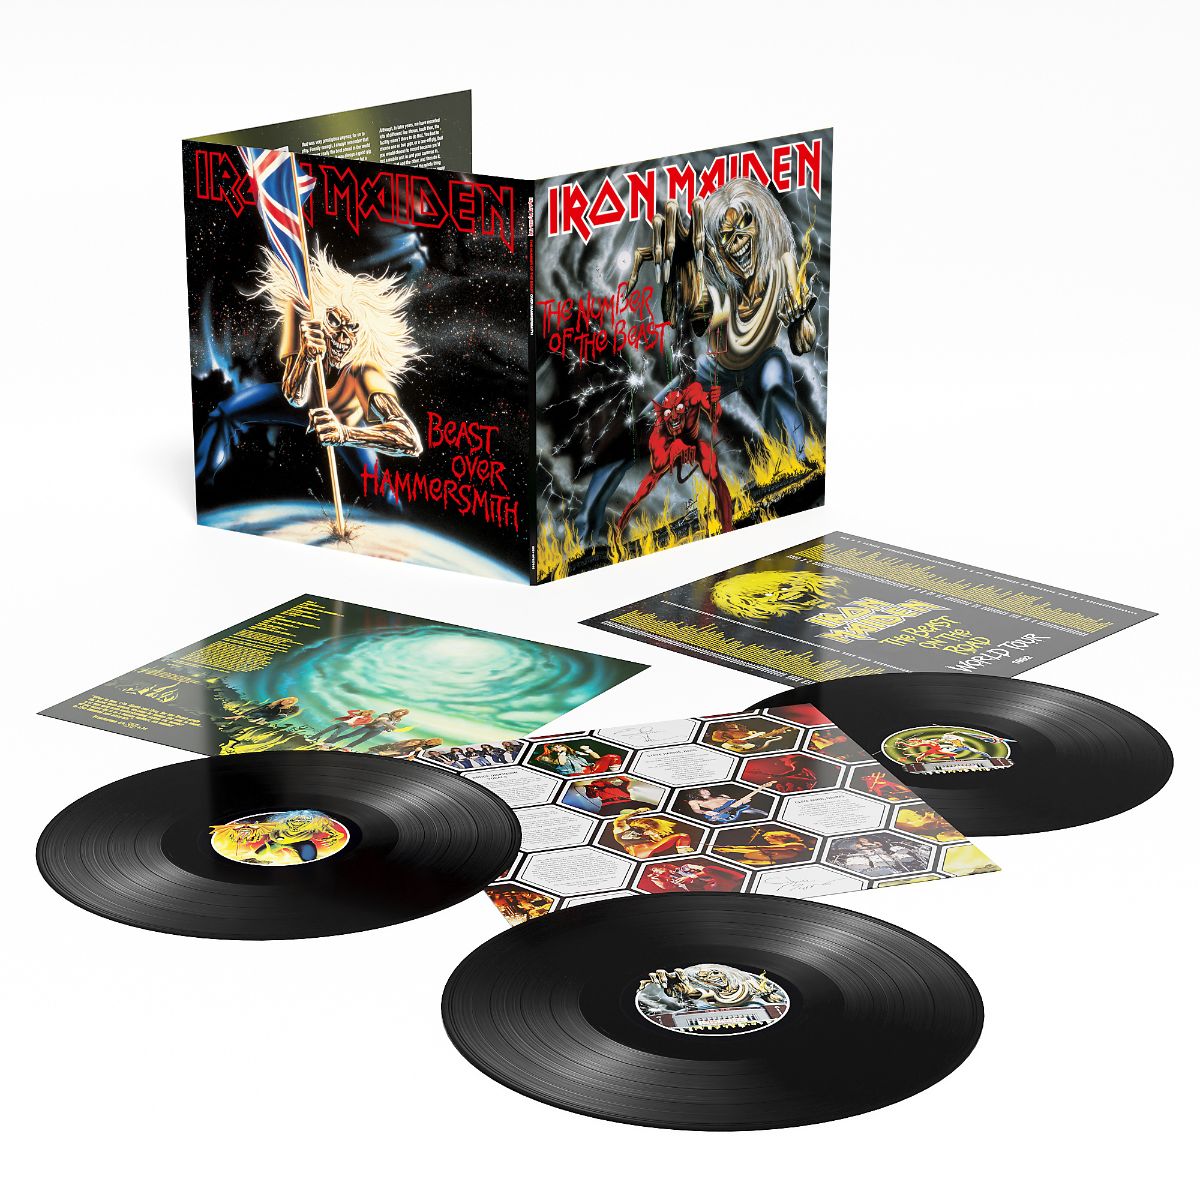 Trenutno pregledavate Trostruko vinilno izdanje Iron Maidena povodom 40. obljetnice albuma “The Number Of The Beast” dostupno za Pre-order